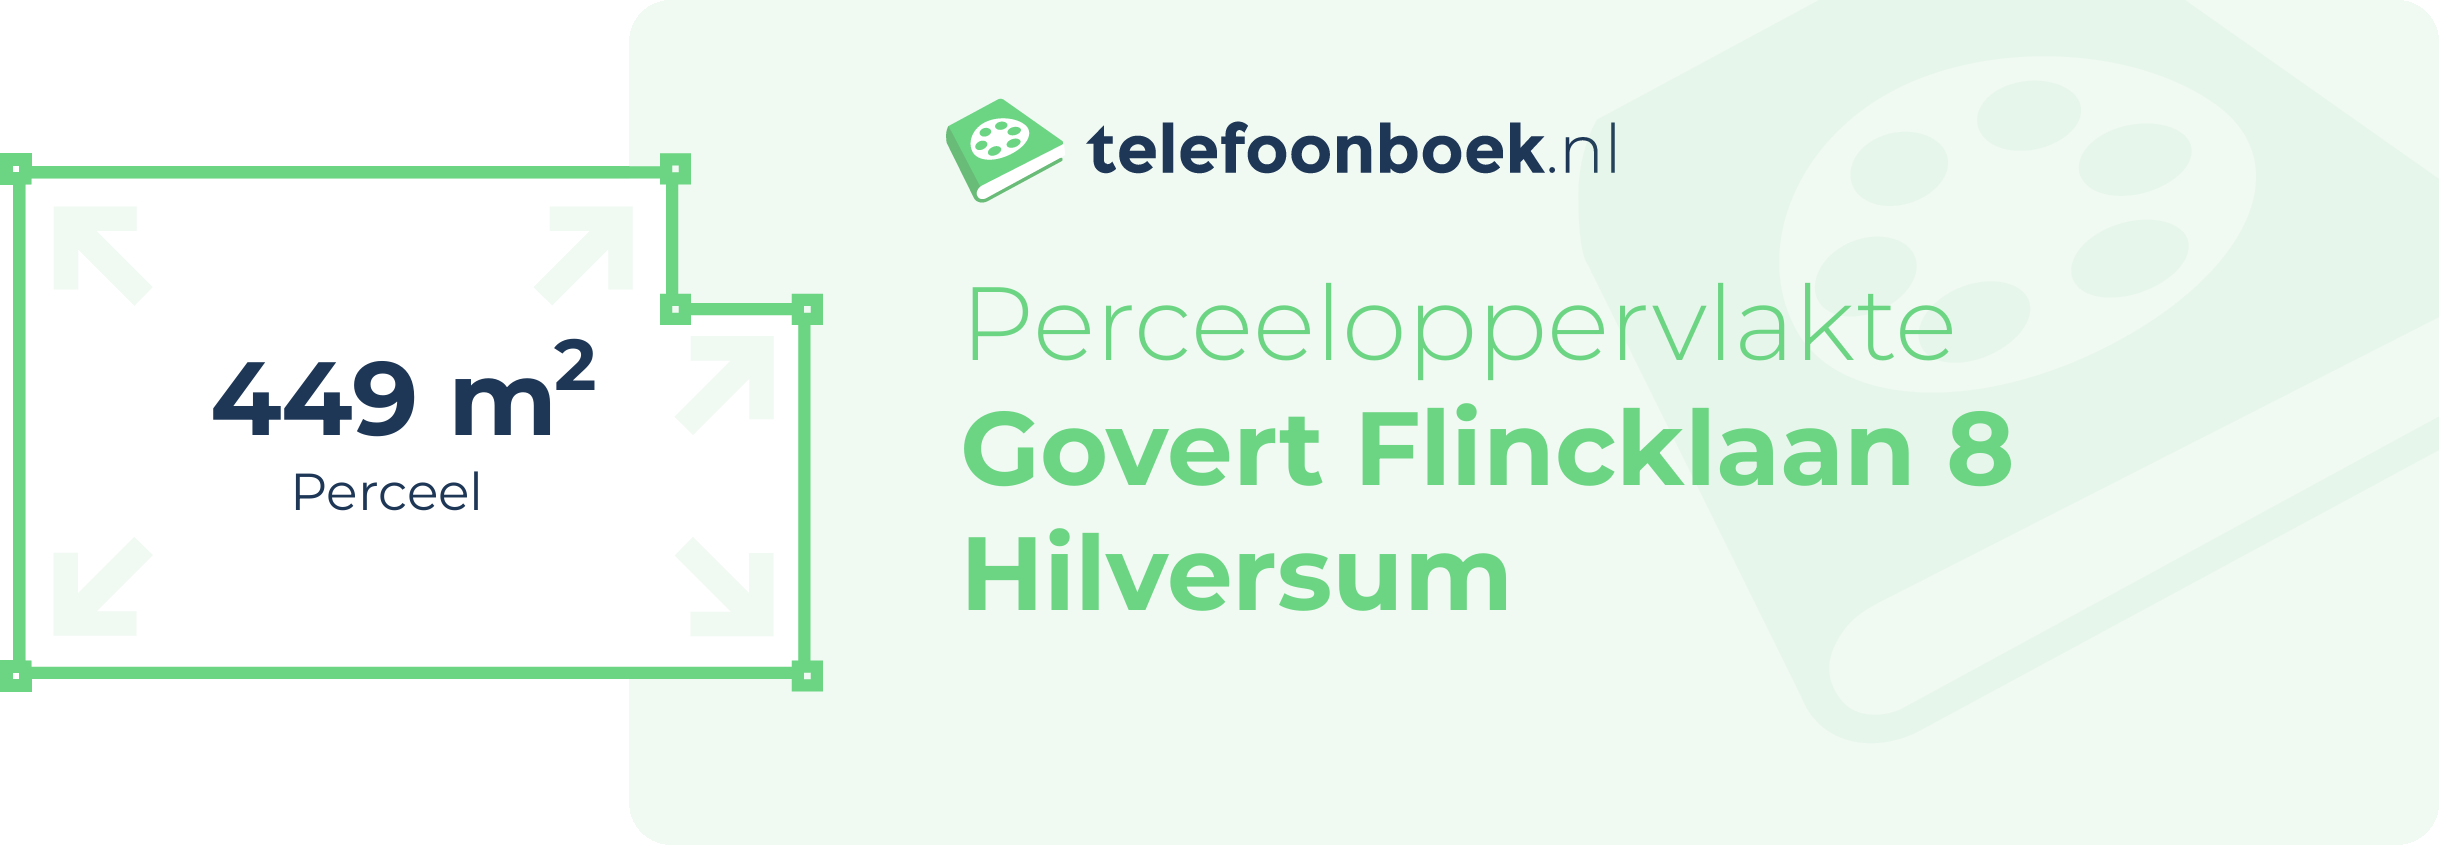 Perceeloppervlakte Govert Flincklaan 8 Hilversum